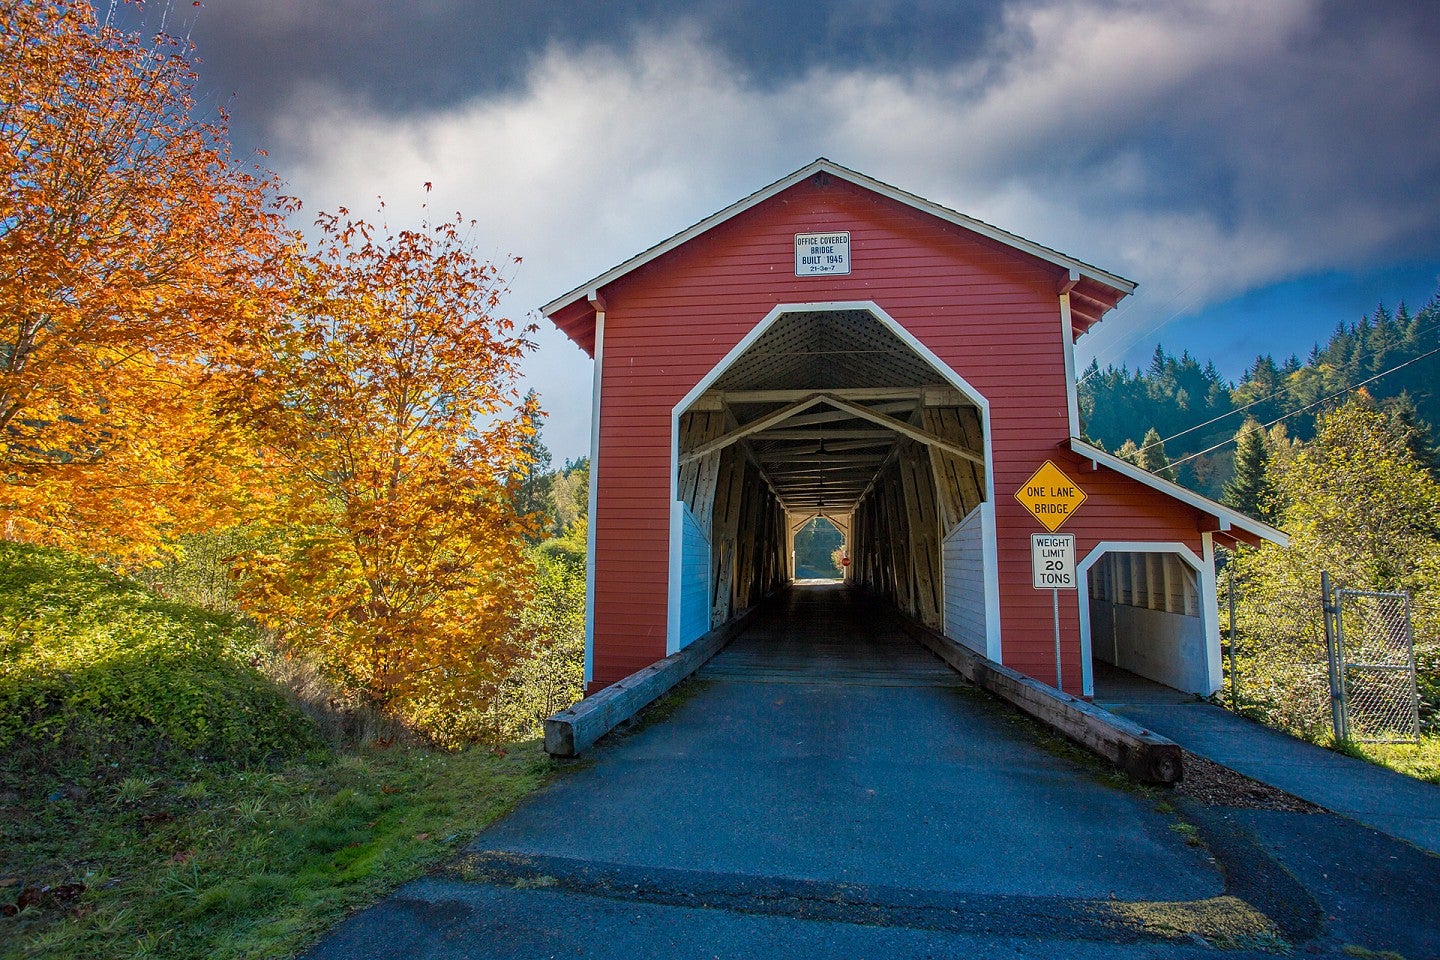 Covered bridge in Oakridge, Oregon with autumn trees surrounding it